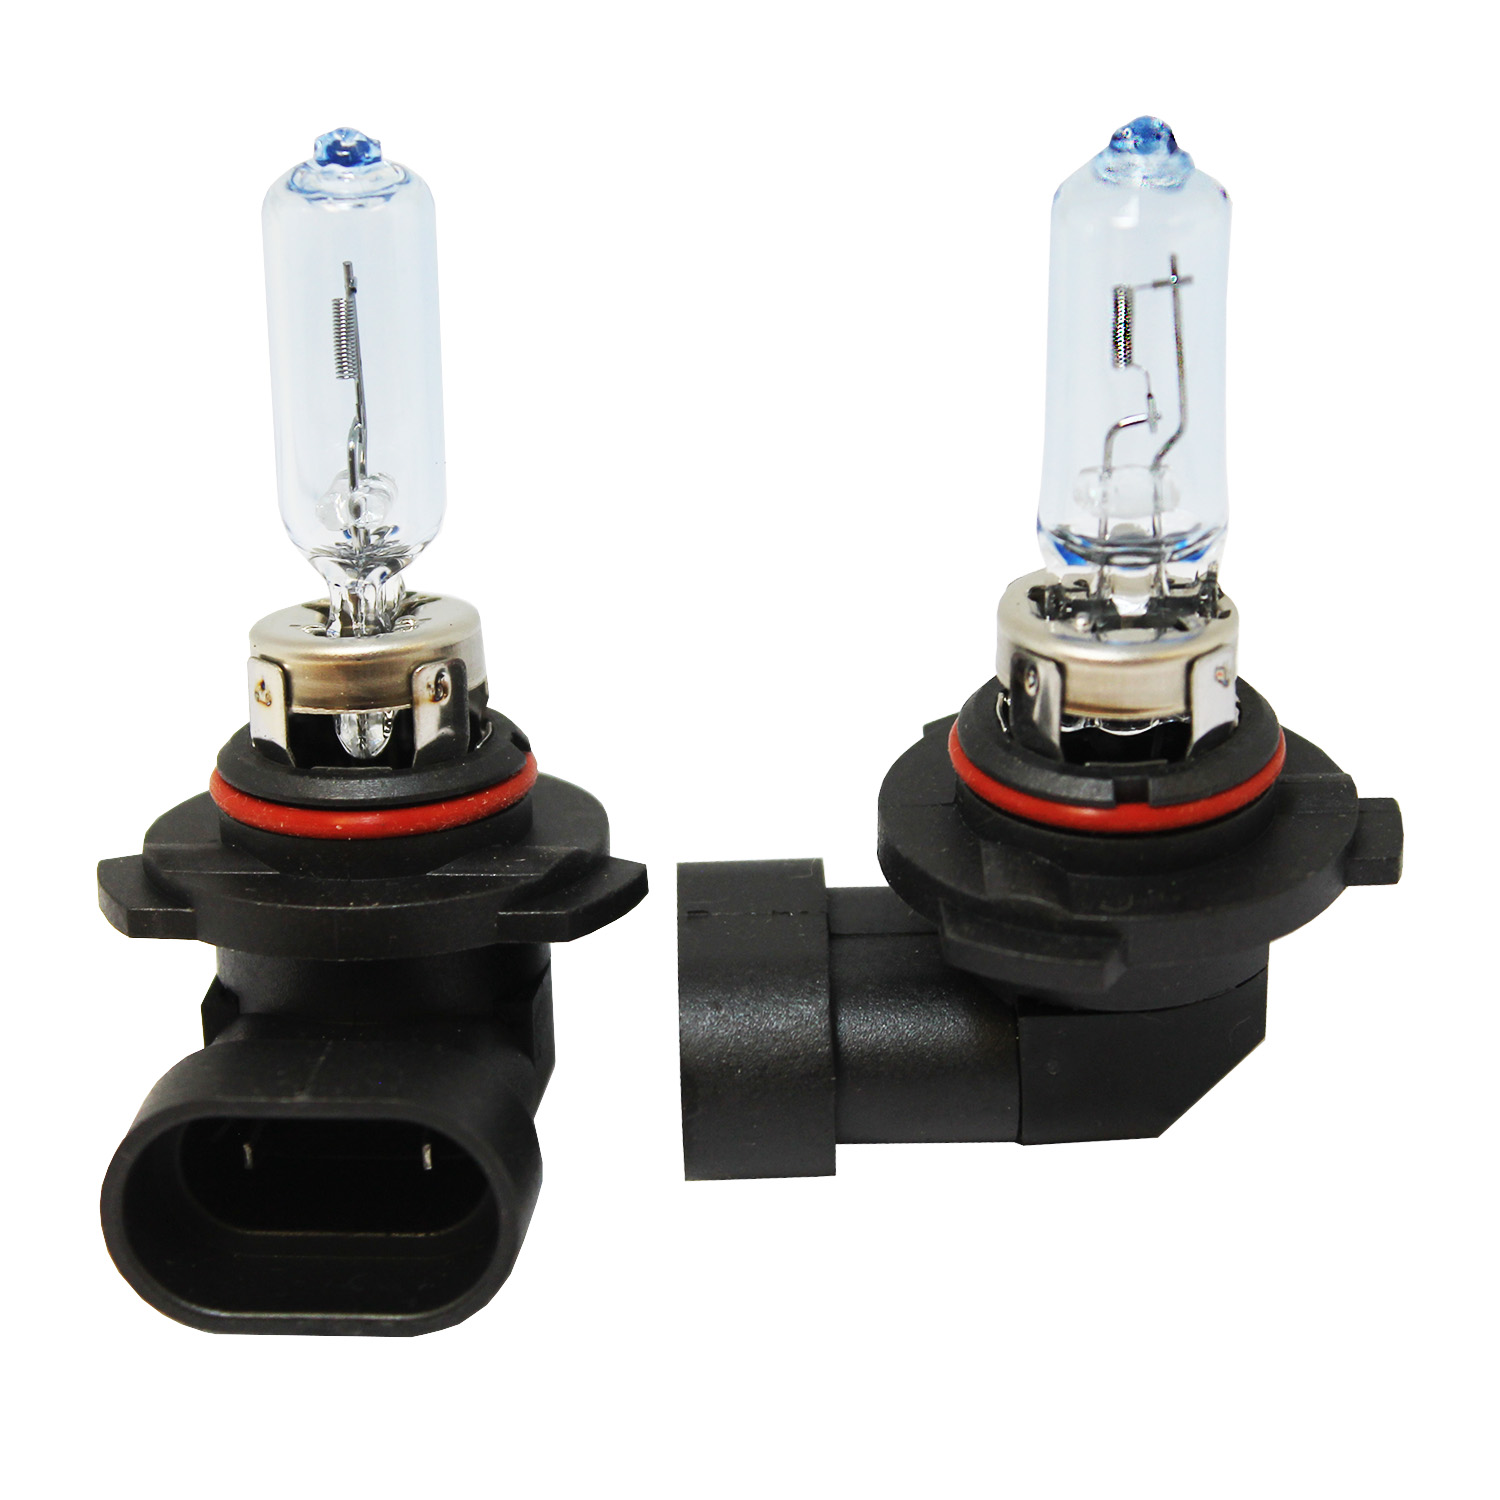 Autobulbs HB3 12V 65W Extreme White Xenon Headlight Bulbs (Pair)